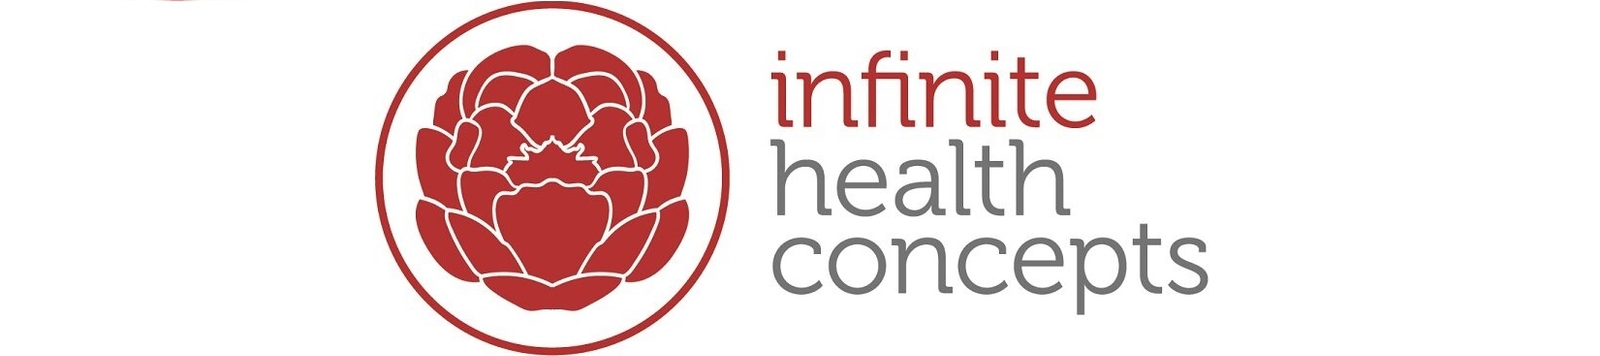 Infinite Health Concepts